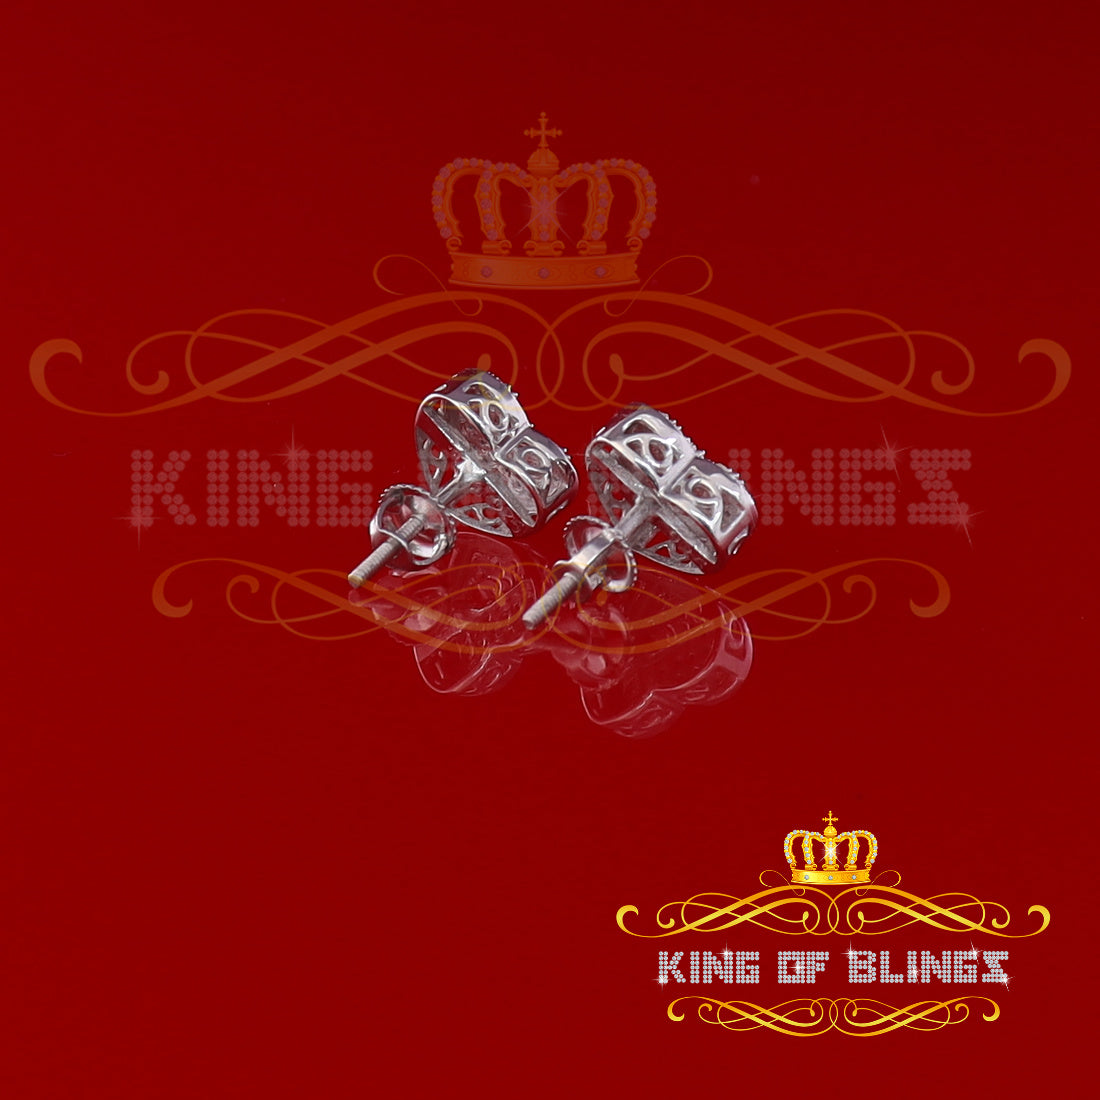 King Of Bling's Aretes Para Hombre Heart 925 White Silver 0.15ct Diamond Women's style Earring KING OF BLINGS